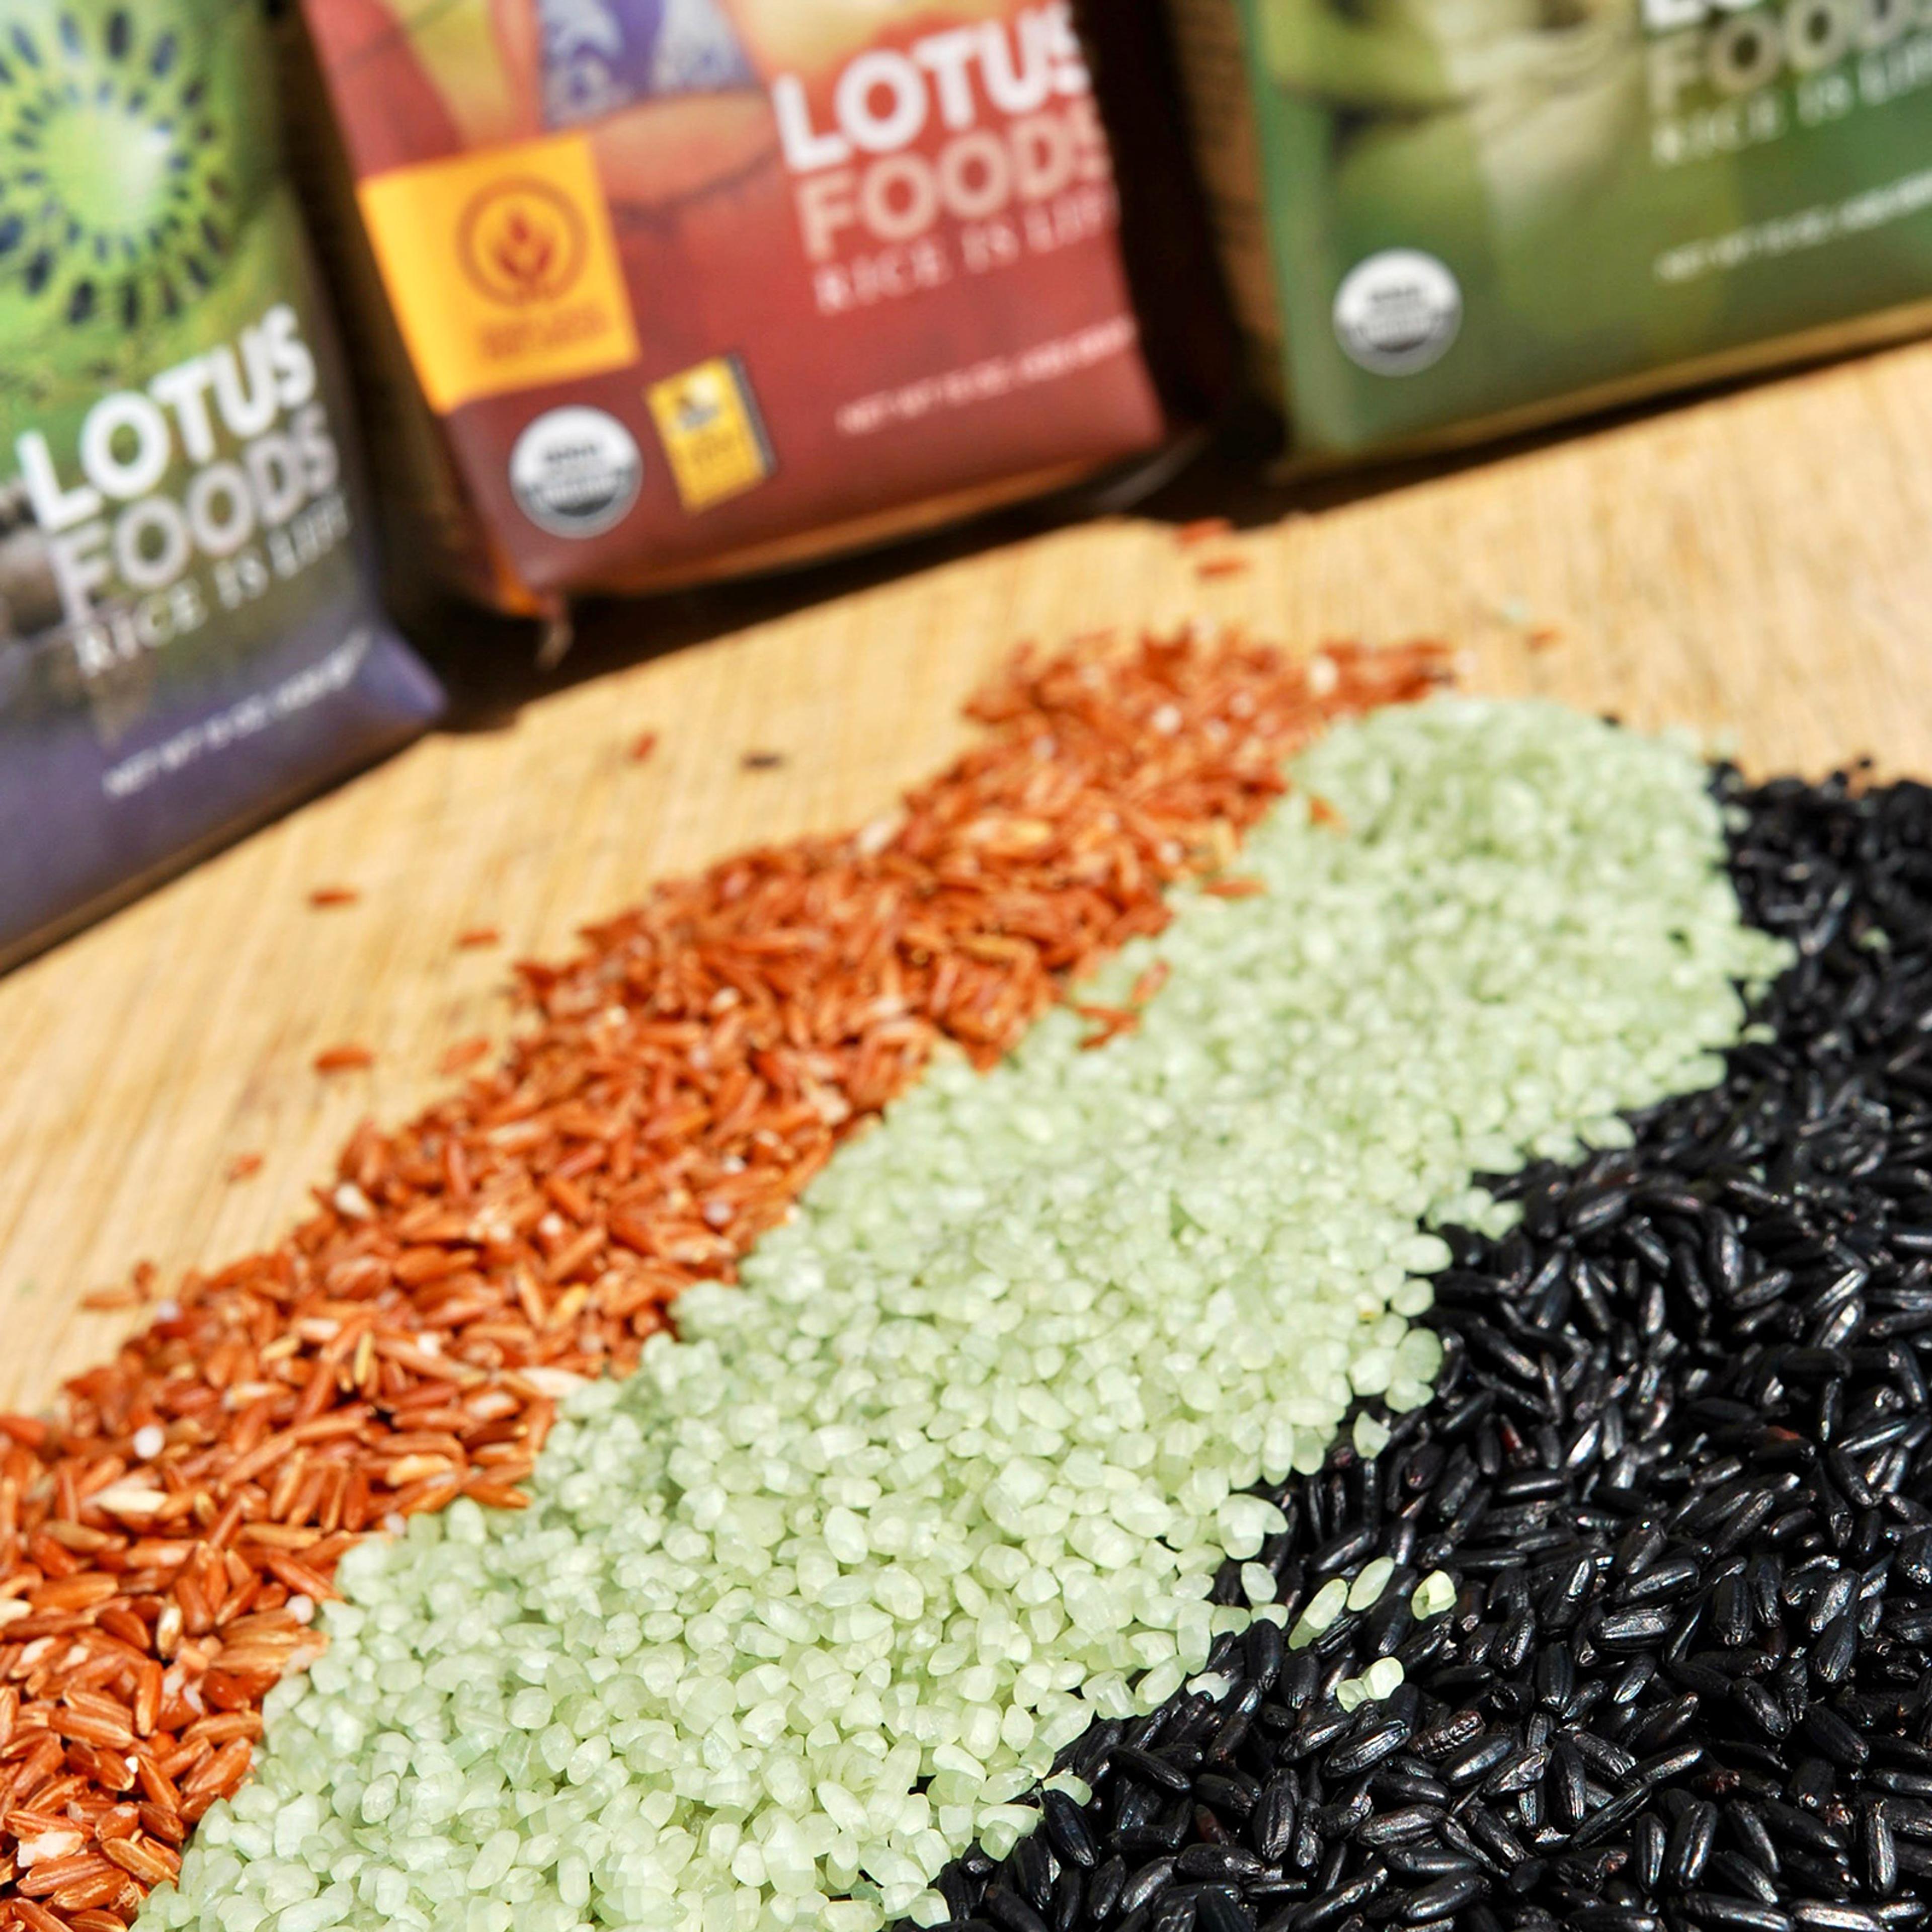 Red, white and black varieties of Lotus Foods rice.